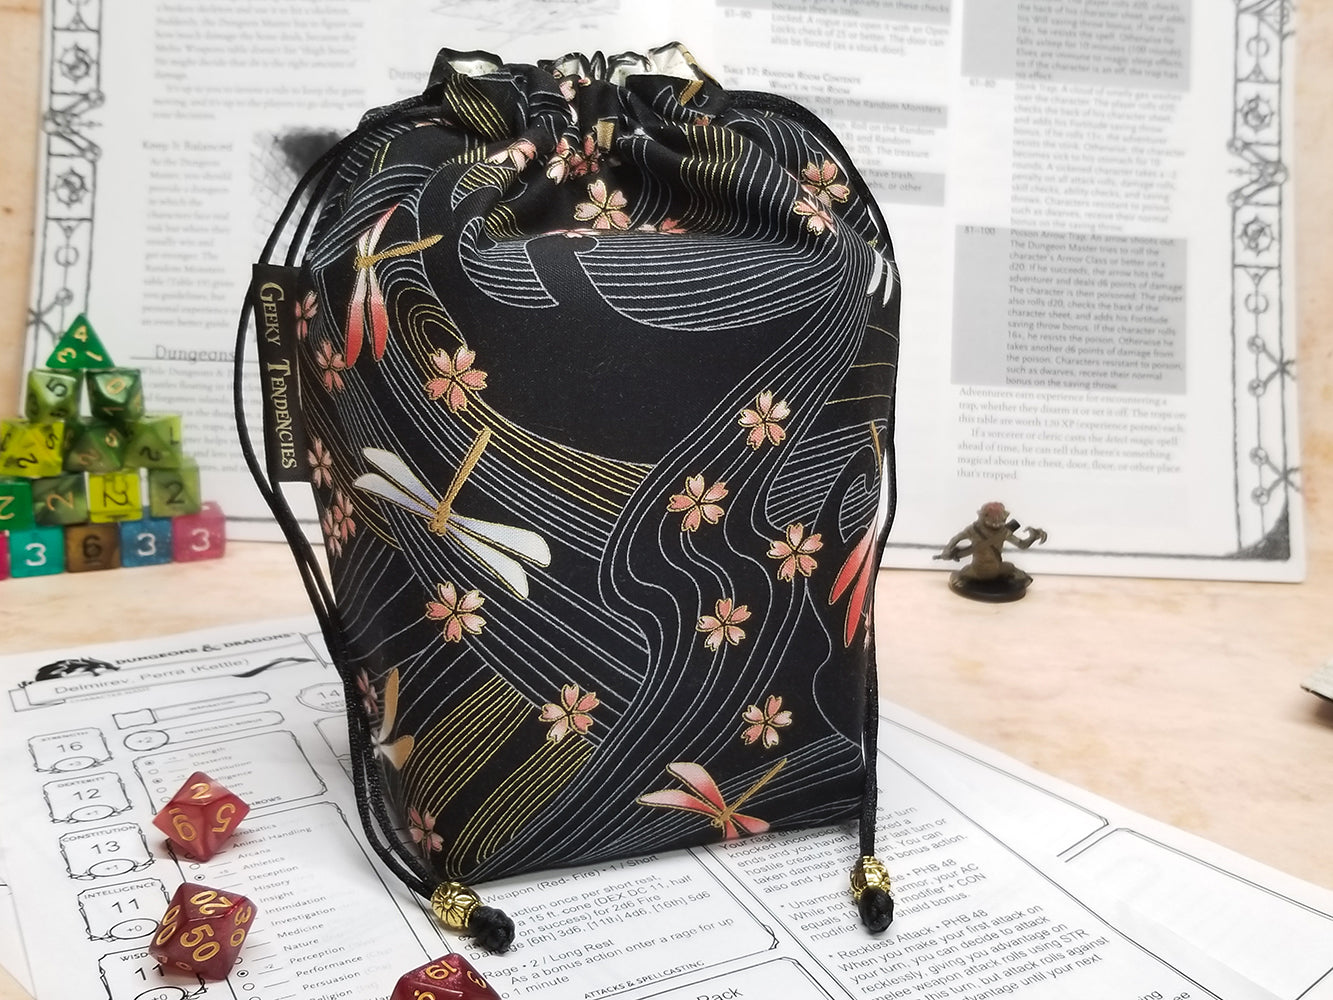 Niwa Dragonflies Dice Bag with Pocket System